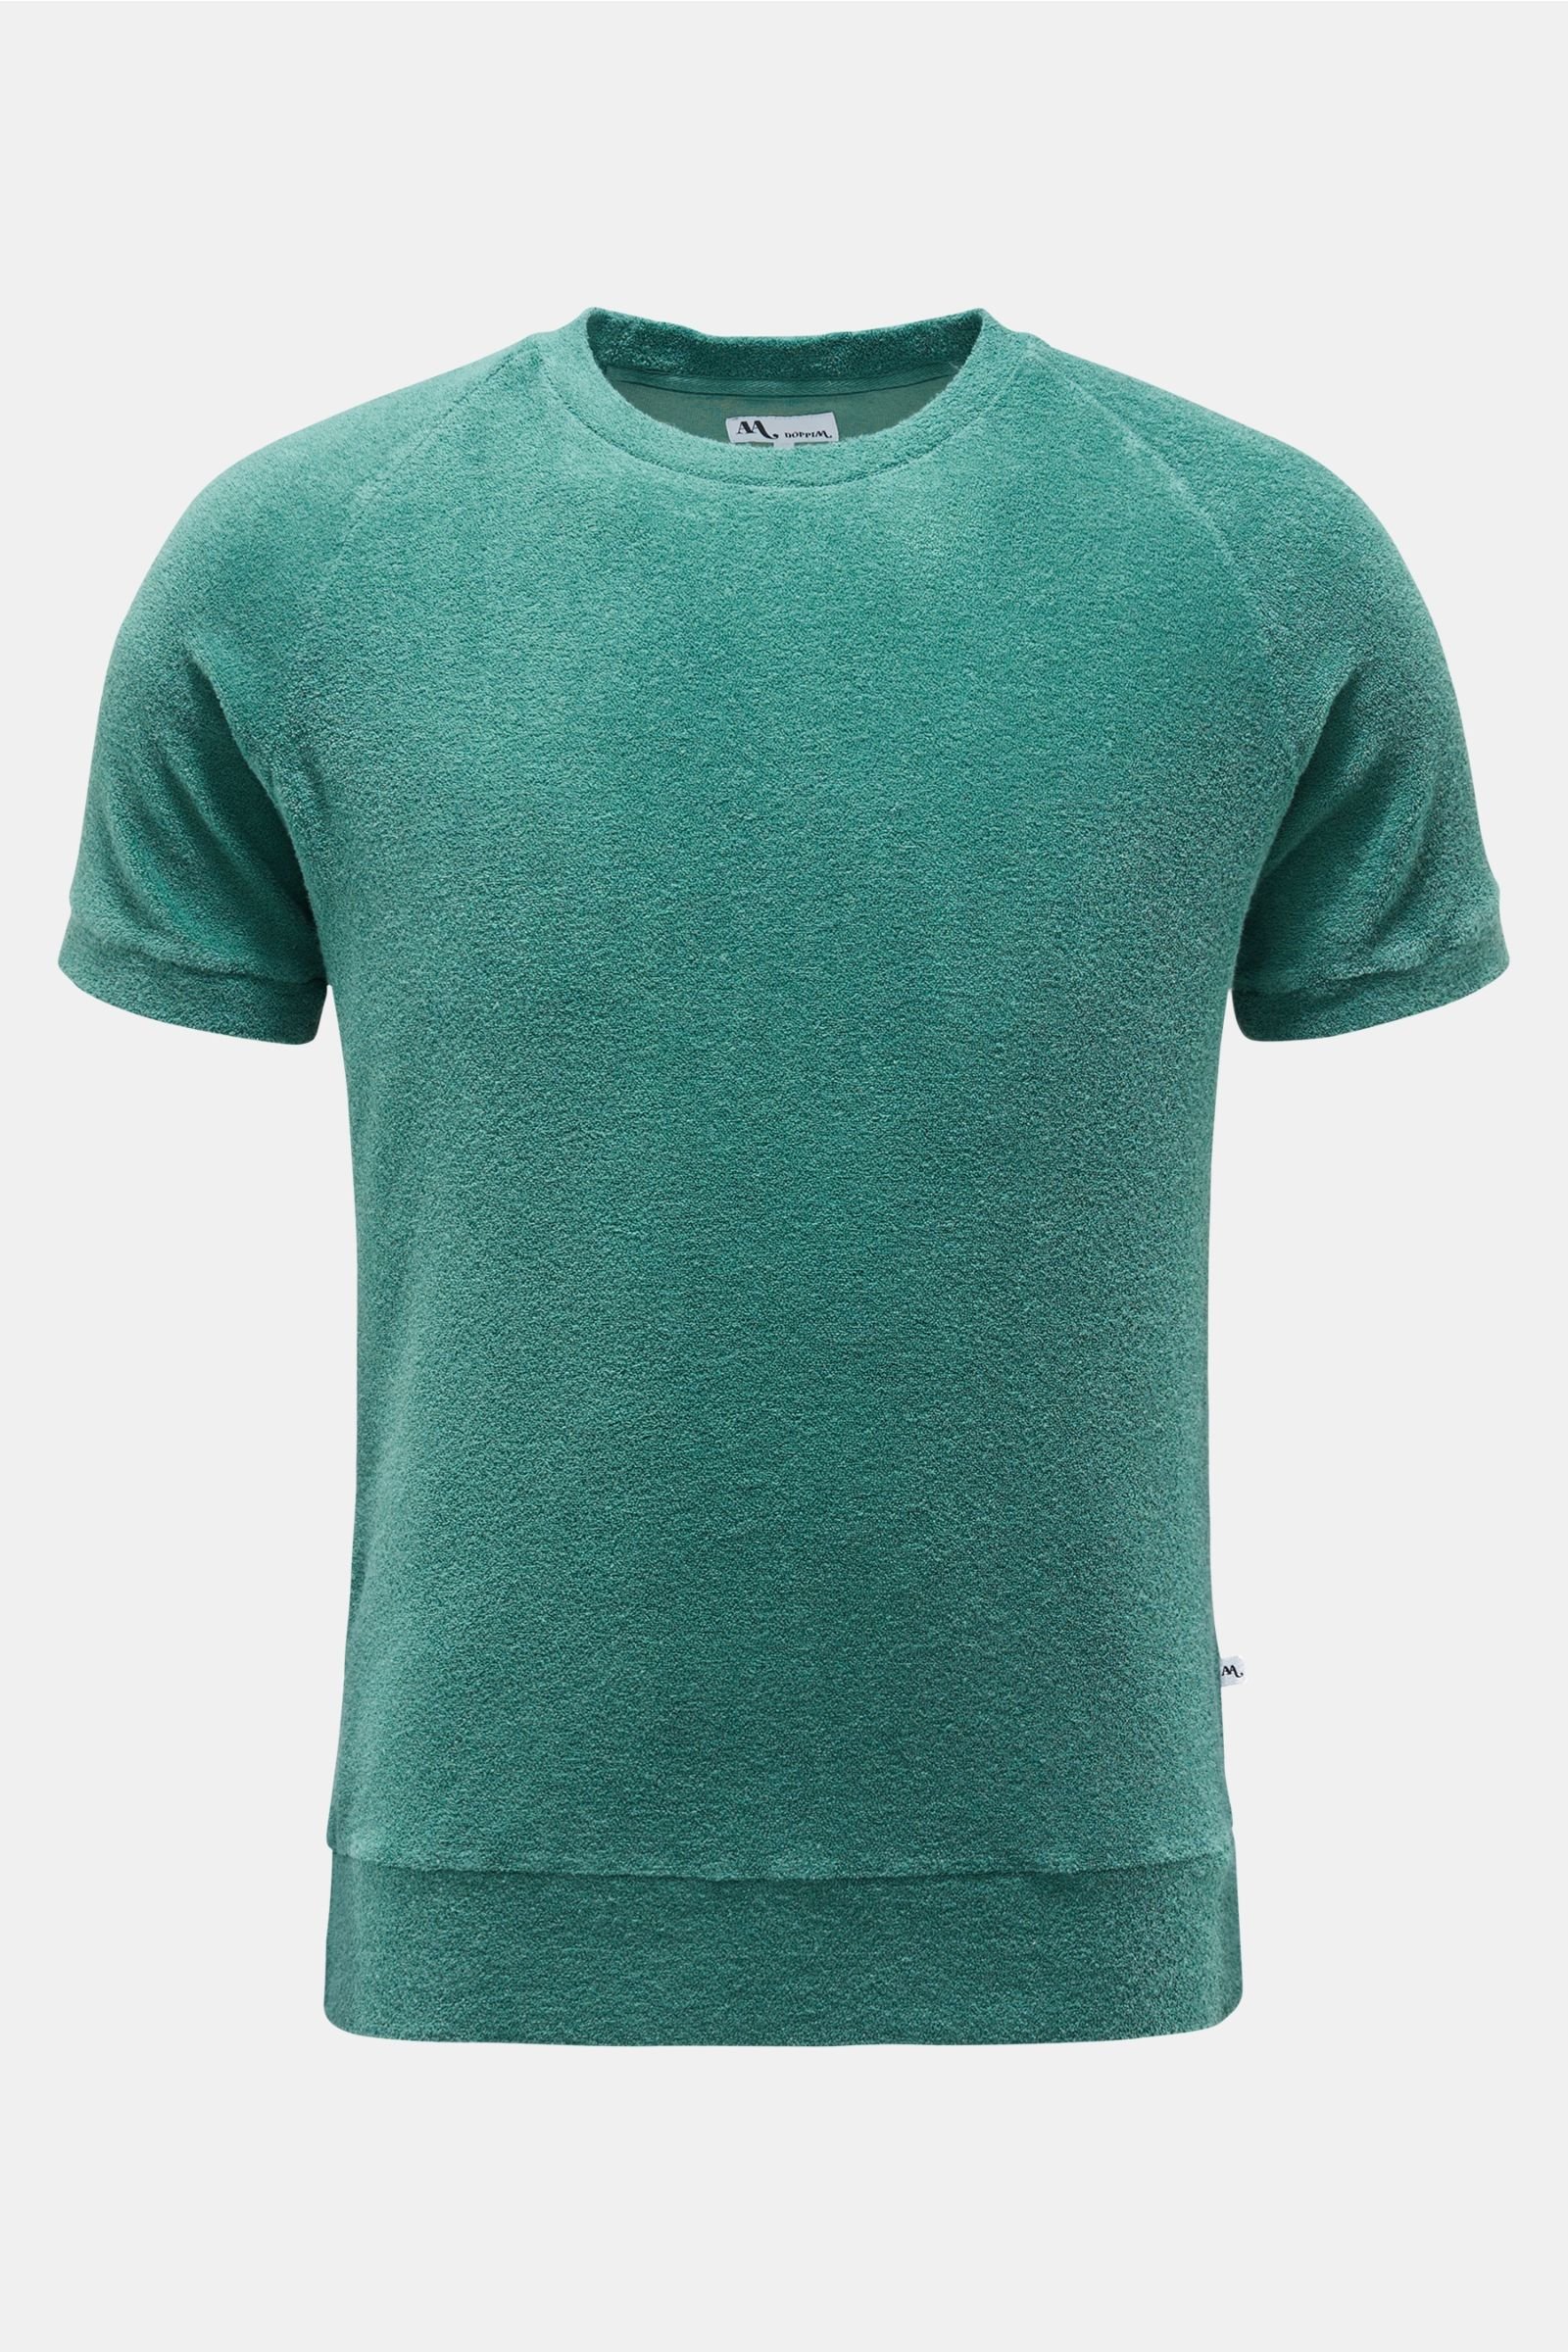 Terry short sleeve sweatshirt 'Aagamennone' mint green